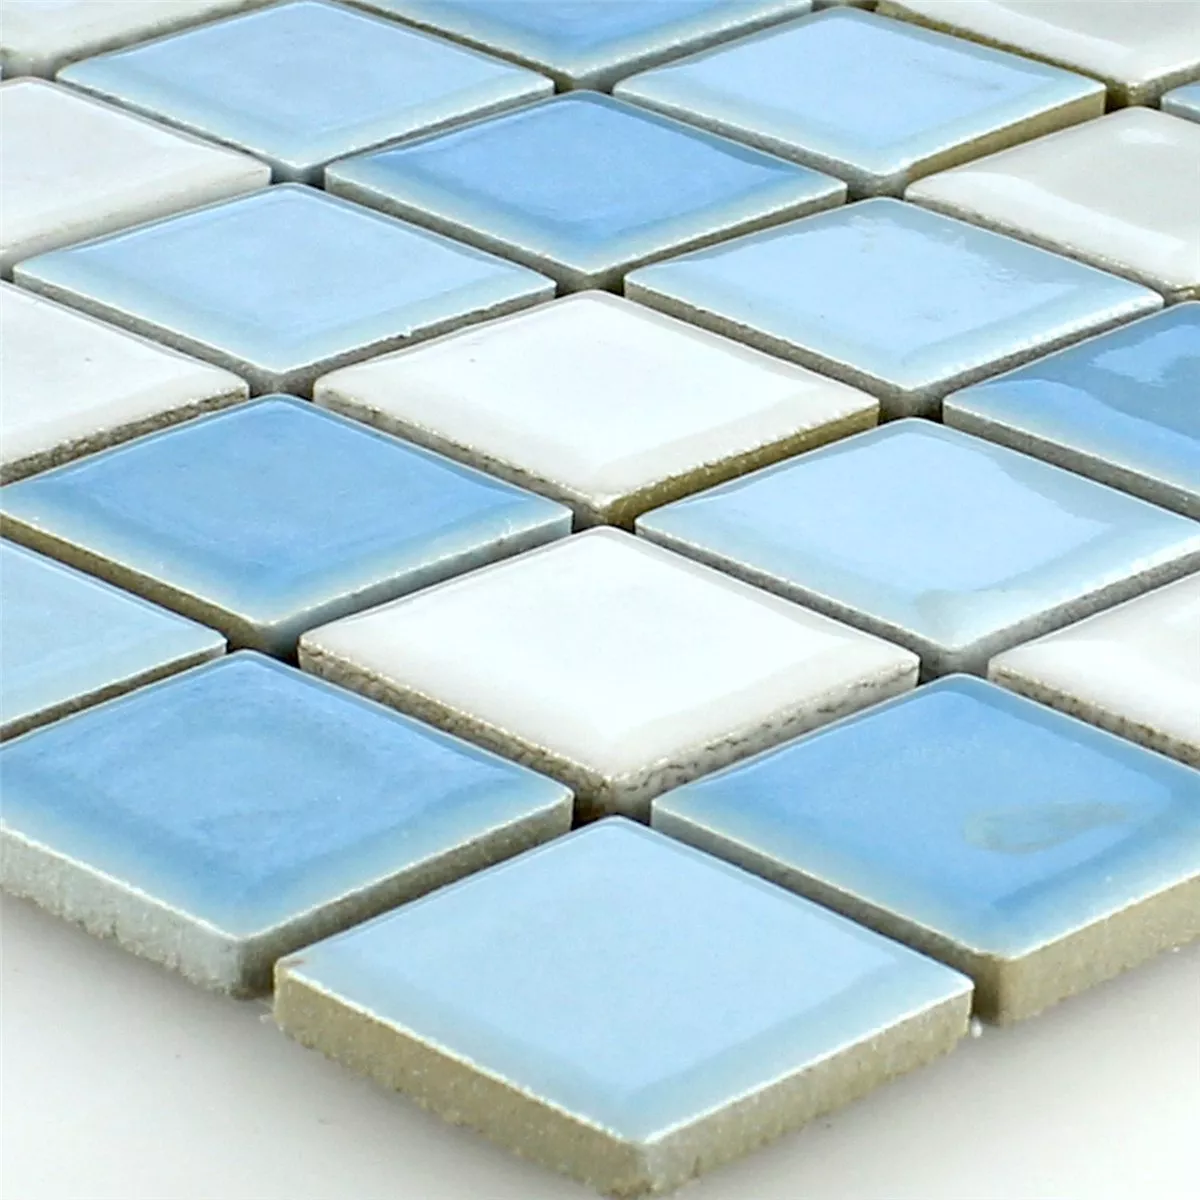 Mozaiková Dlaždice Keramika Bodaway Modrá Bílá 25x25x5mm